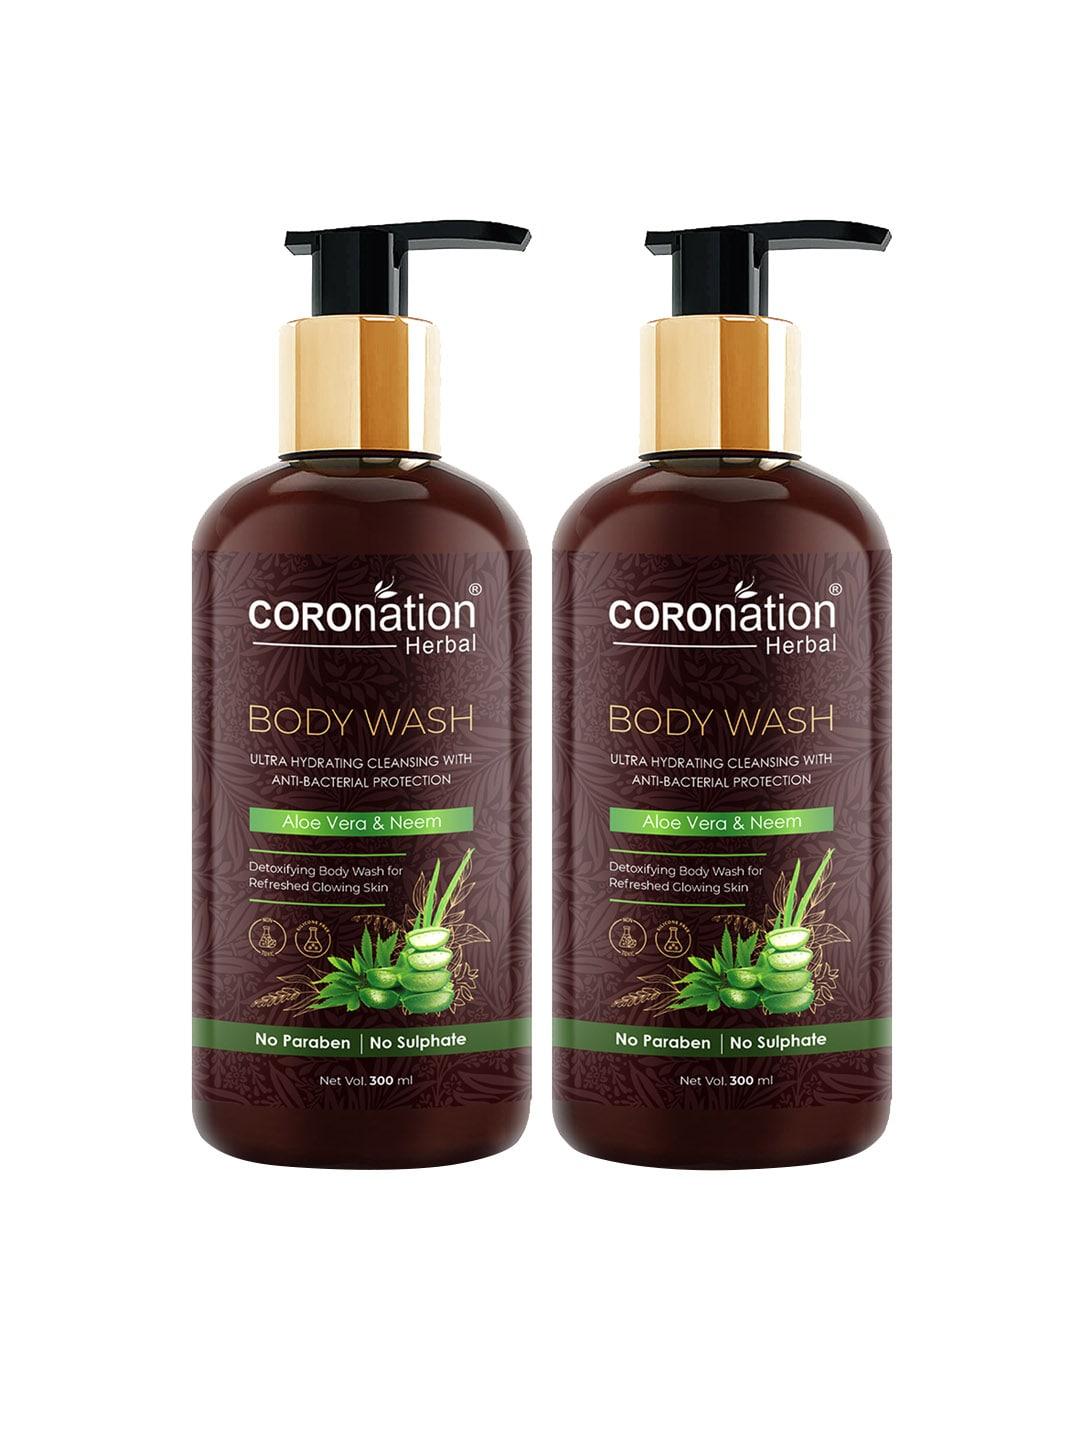 COROnation Herbal Set of 2 Aloe Vera & Neem Body Wash 300 ml Each